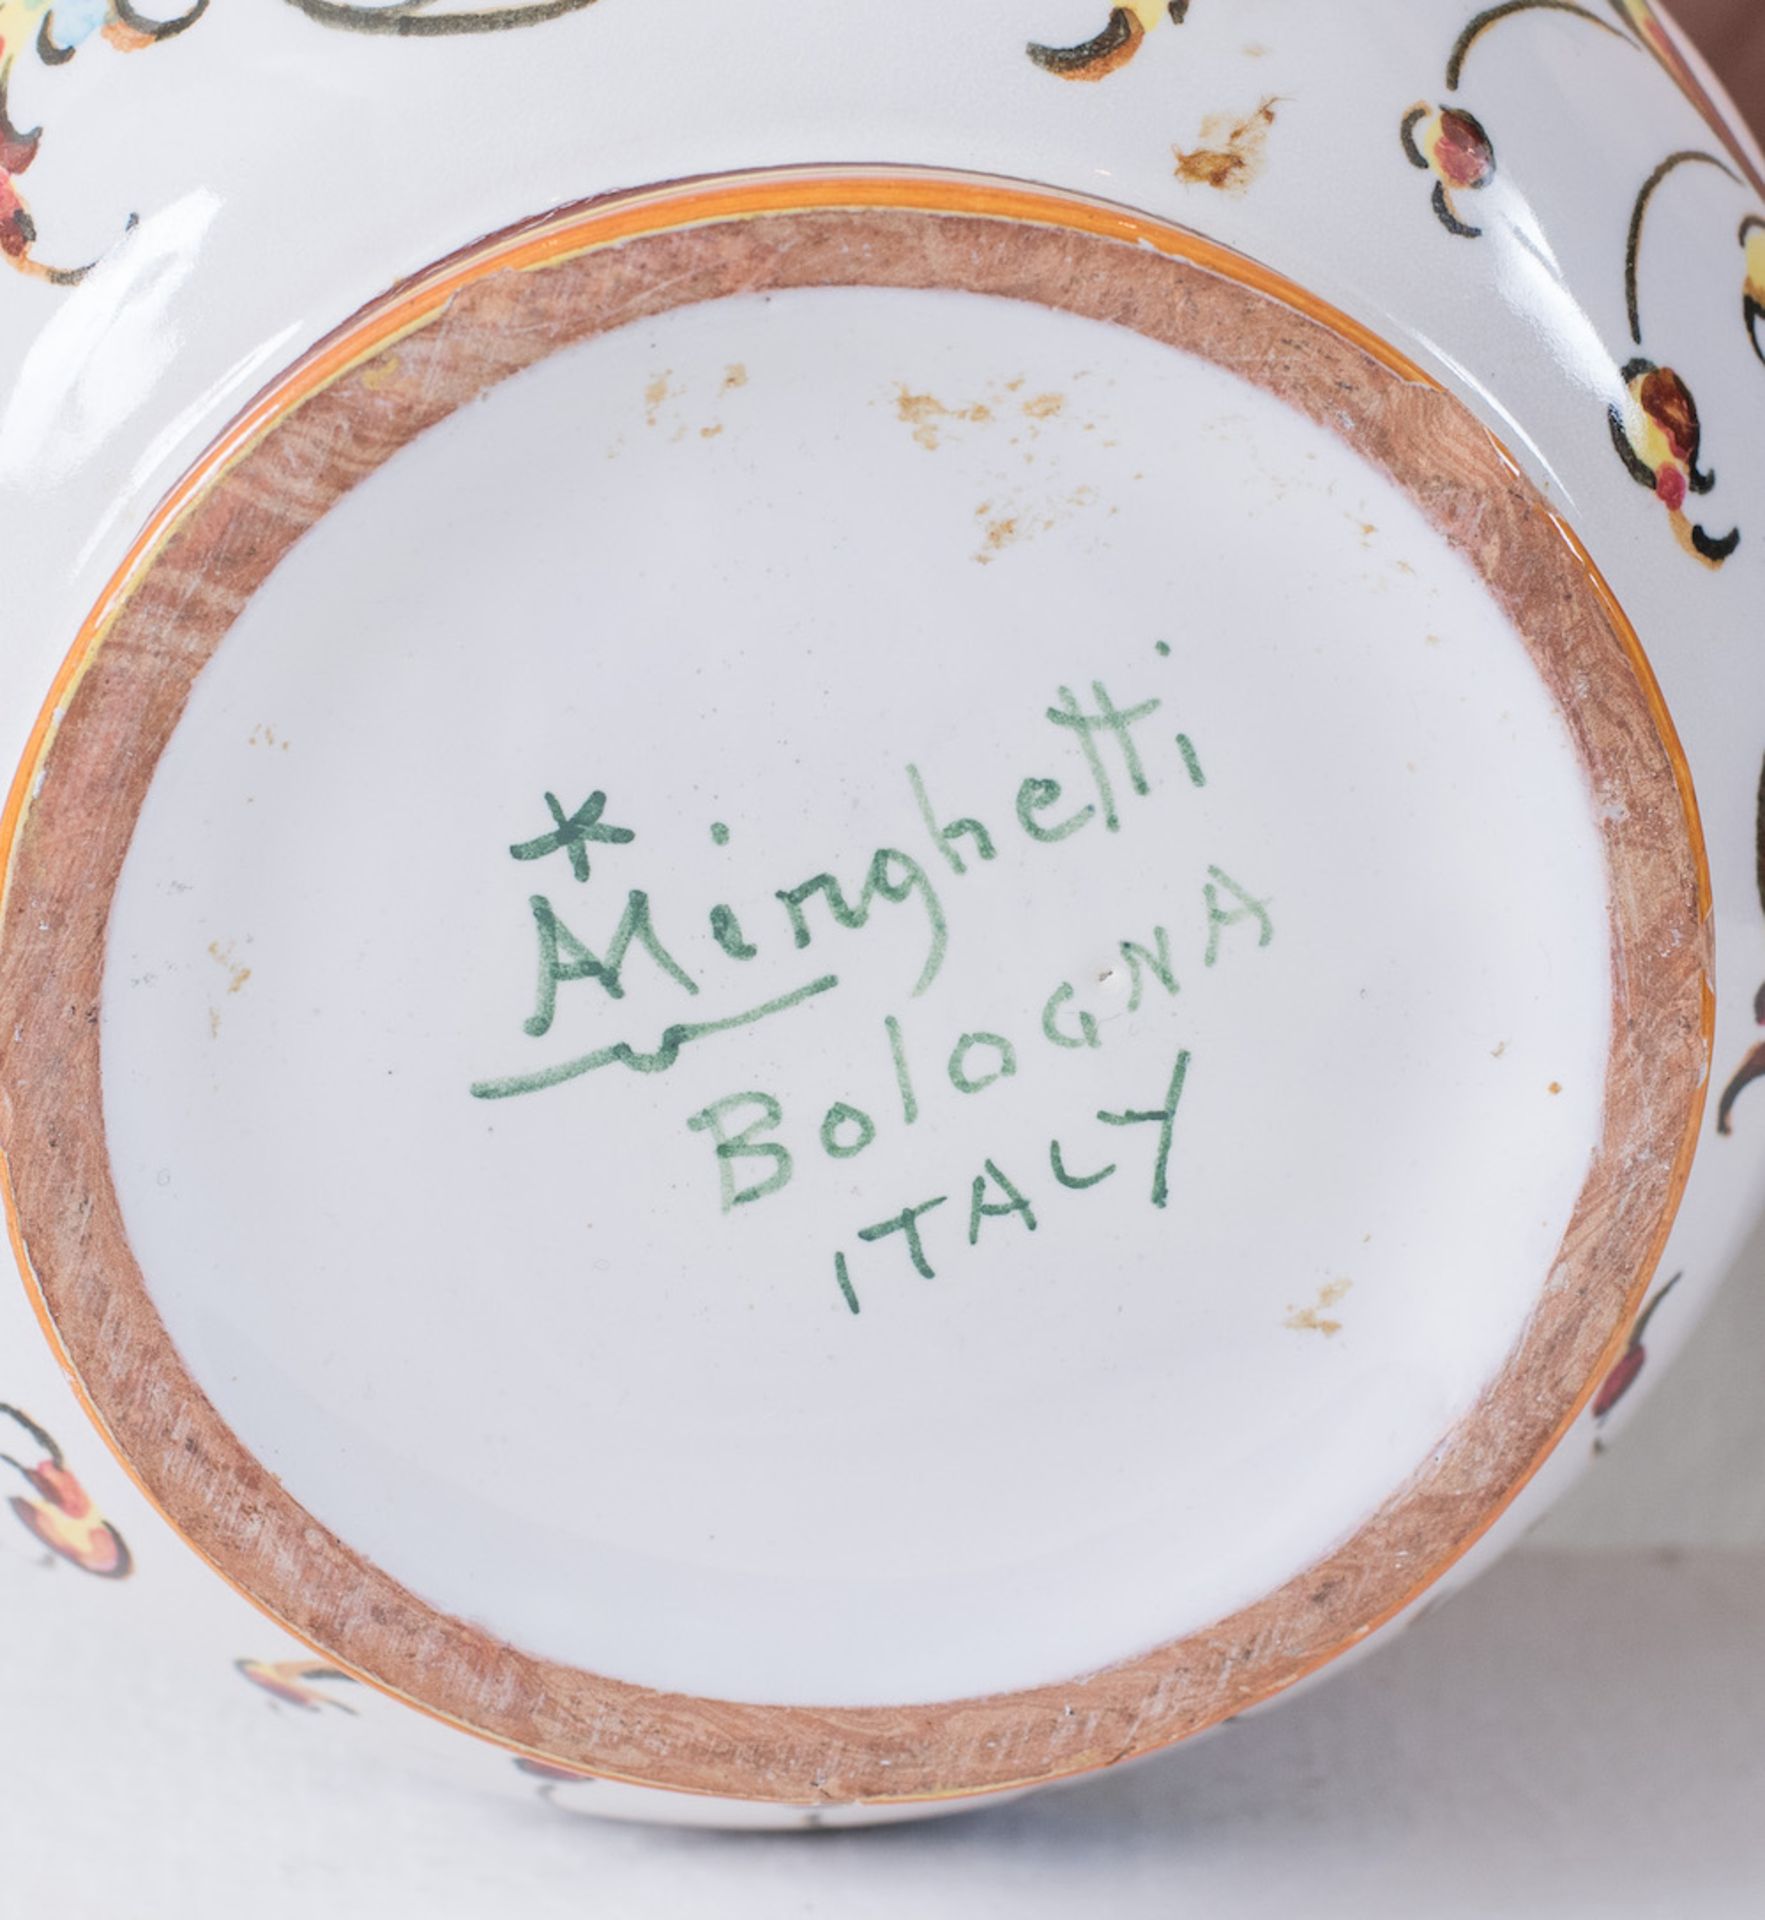 ANGELO MINGHETTI, Bologna, XX secolo. Vaso in porcellana policroma. Cm 20x11x11. - Bild 3 aus 3